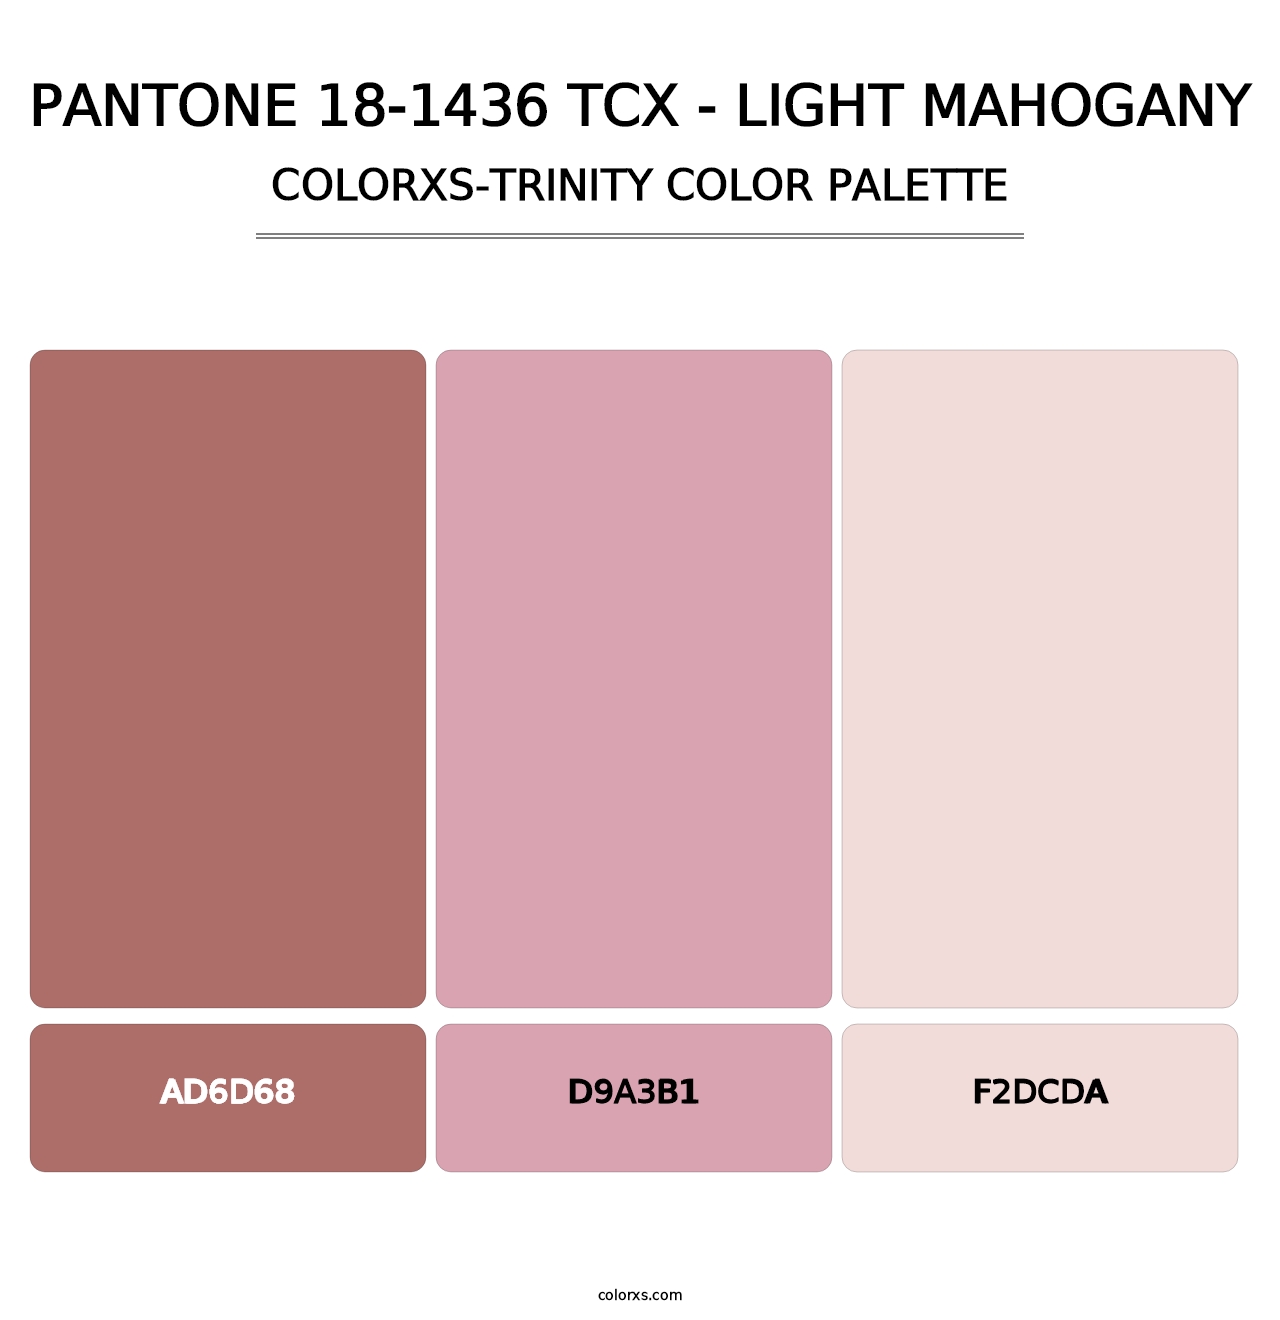 PANTONE 18-1436 TCX - Light Mahogany - Colorxs Trinity Palette